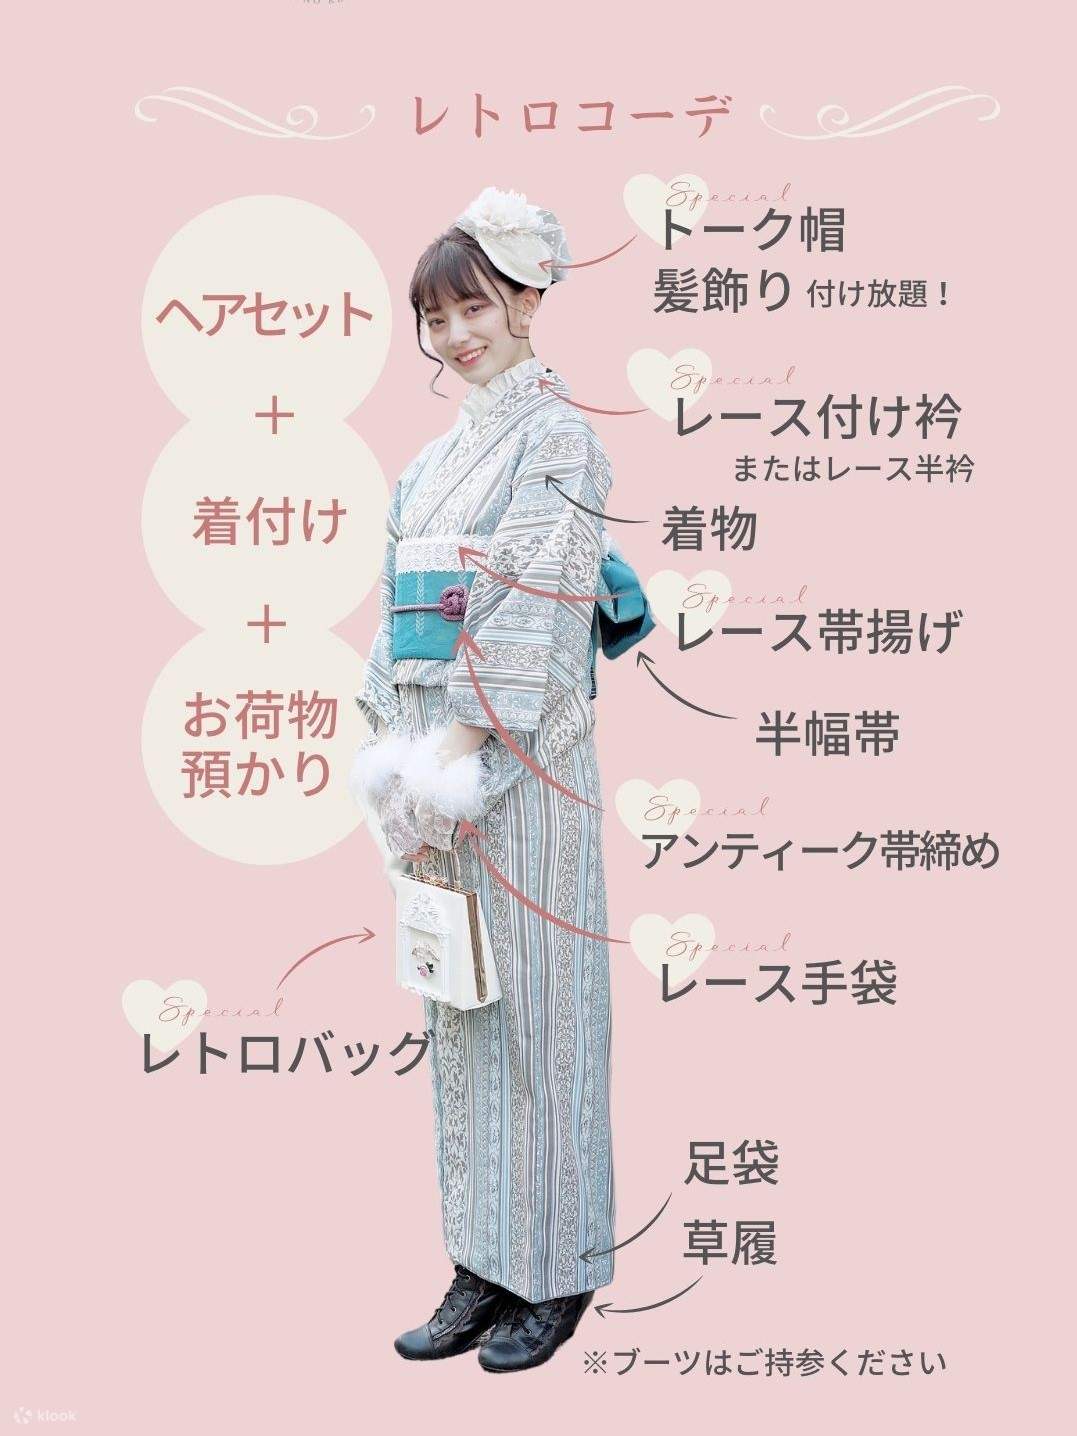 Kimono Rental Experience by Aiwafuku in Tokyo, Japan - Klook